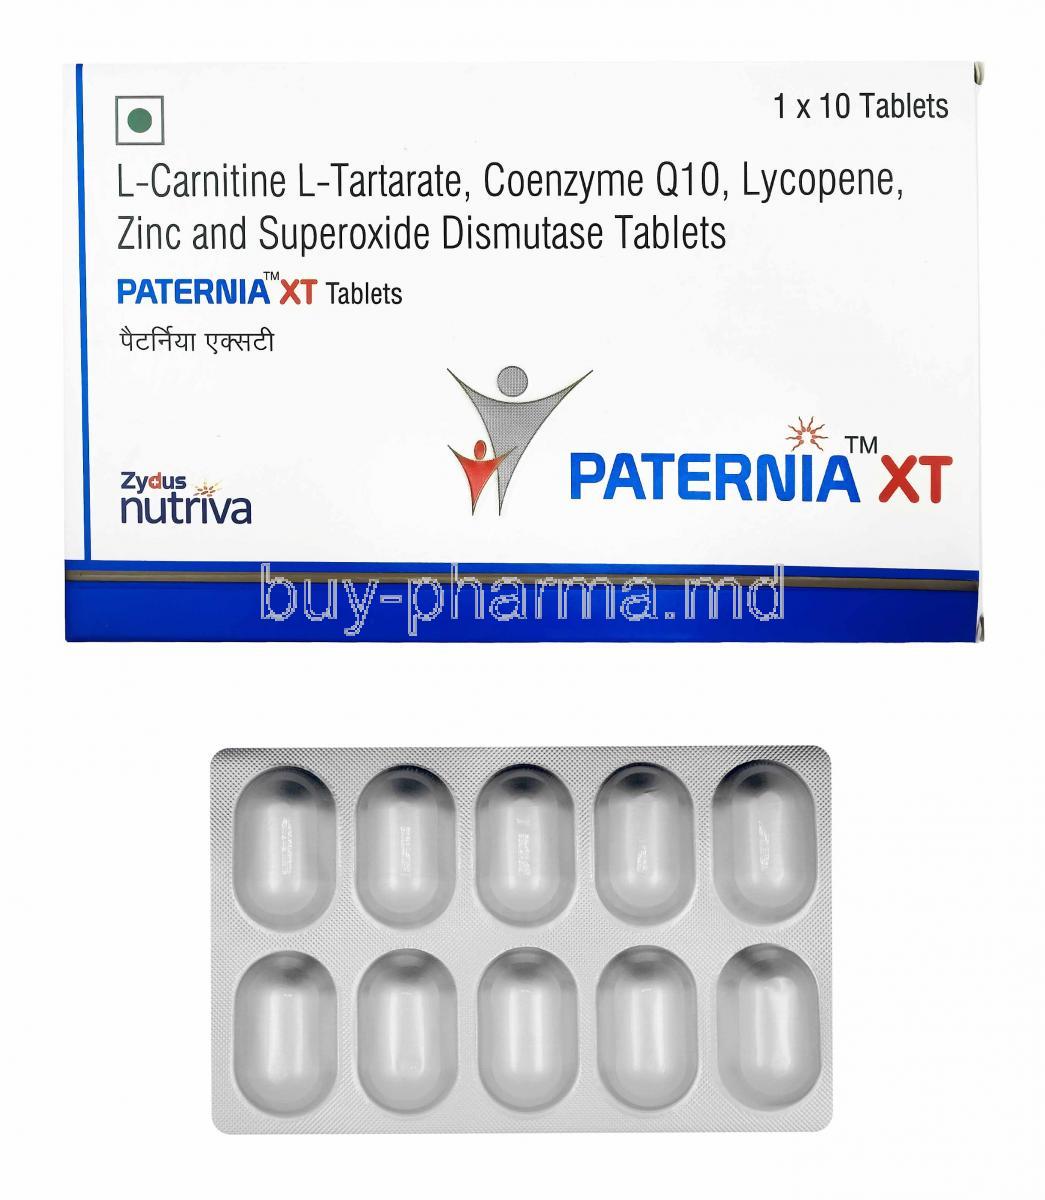 Paternia XT box and tablets